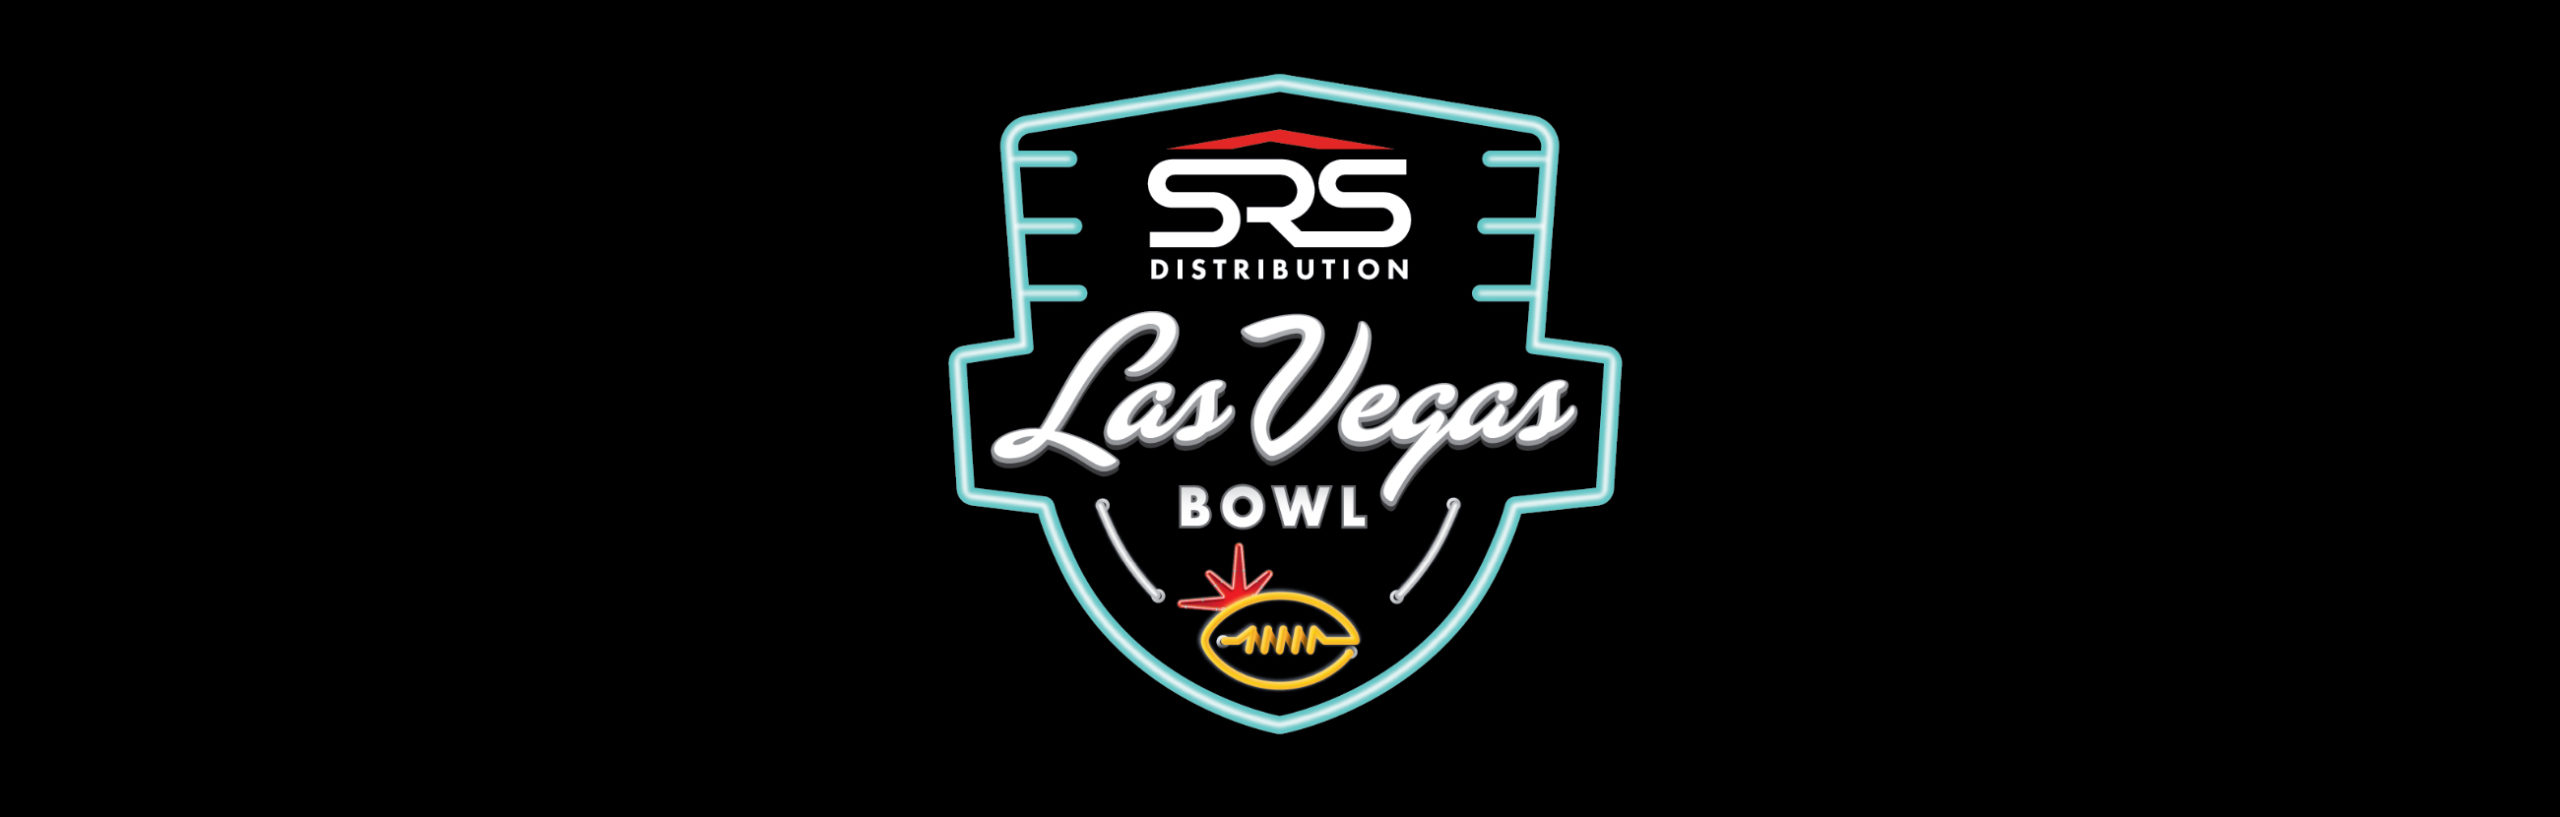 SRS Distribution Announced as New Title Sponsor of Las Vegas Bowl